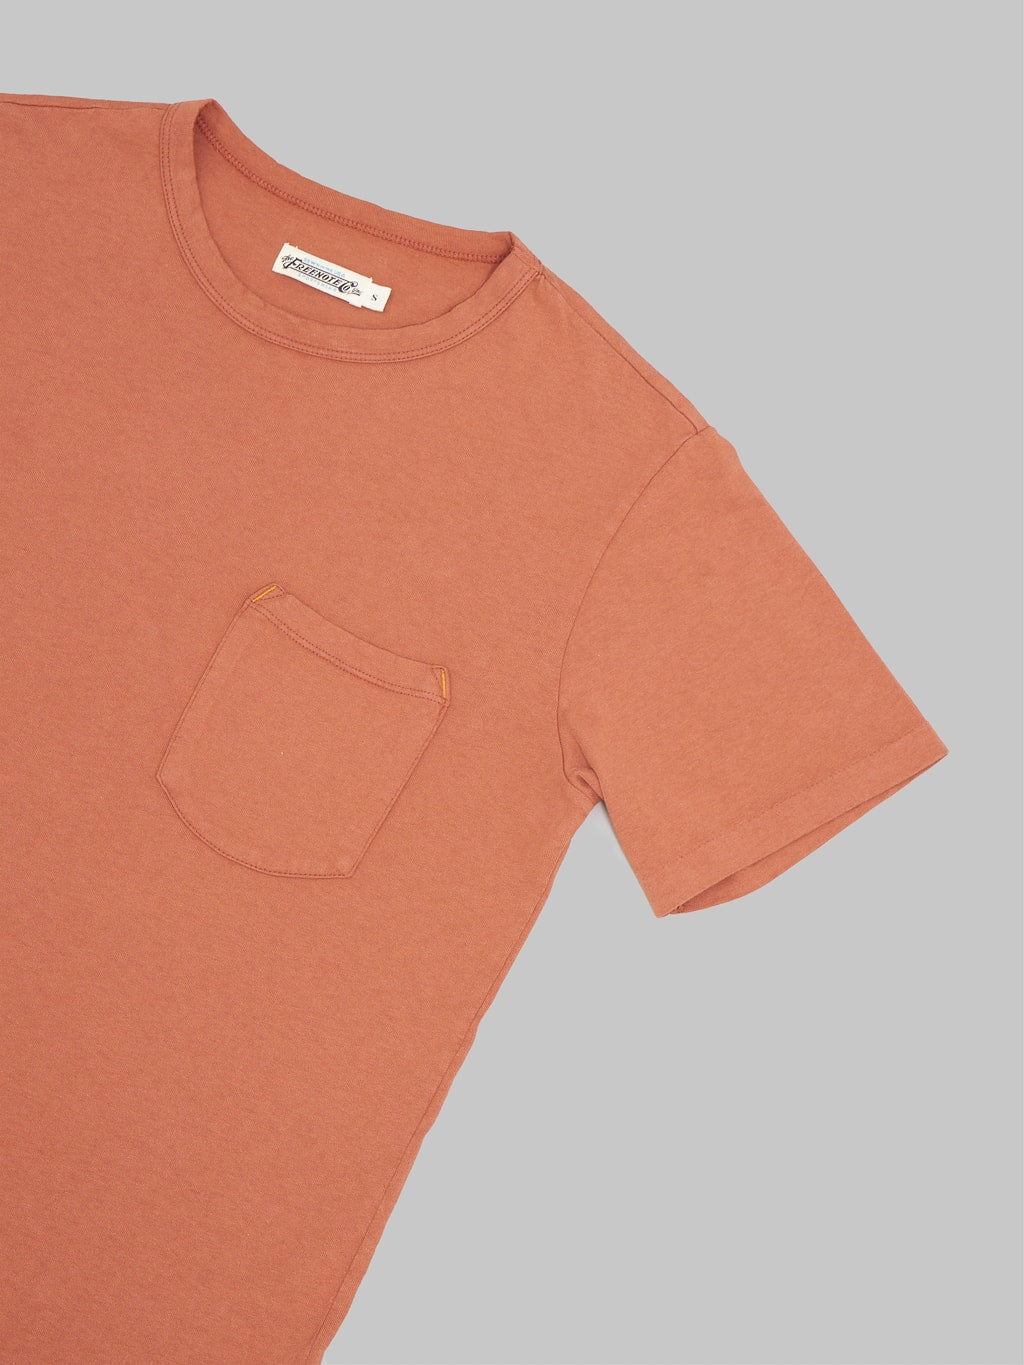 Freenote cloth nine ounce pocket tshirt rust sleeve detail